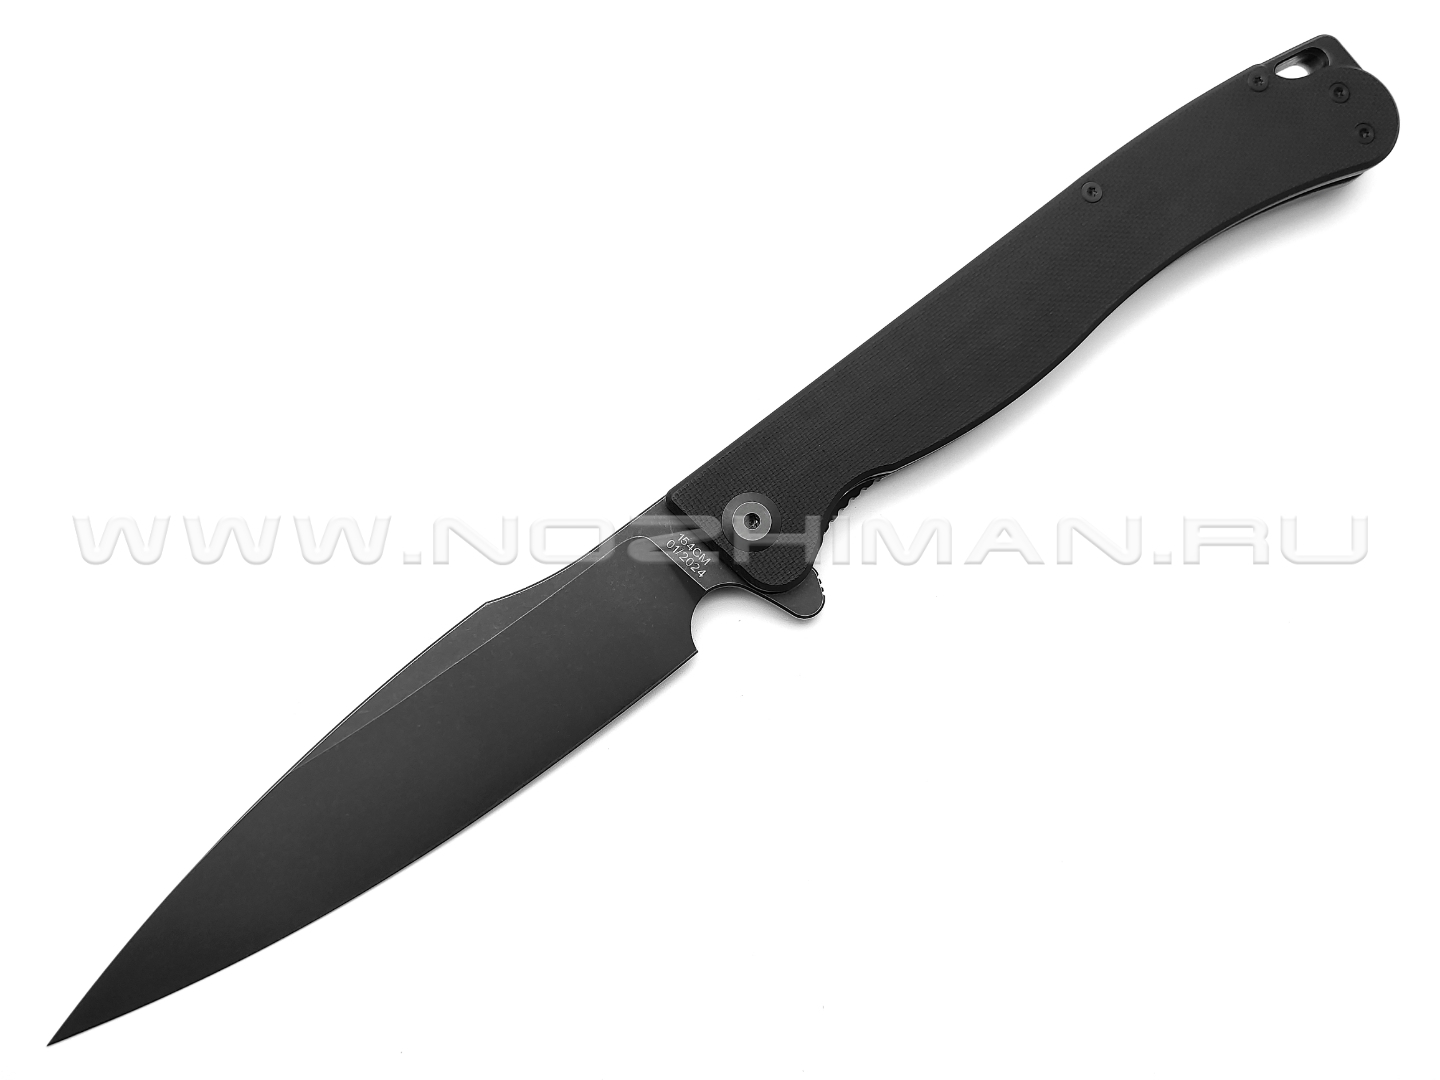 Daggerr нож Condor All Black сталь 154СМ blackwash, рукоять G10 black